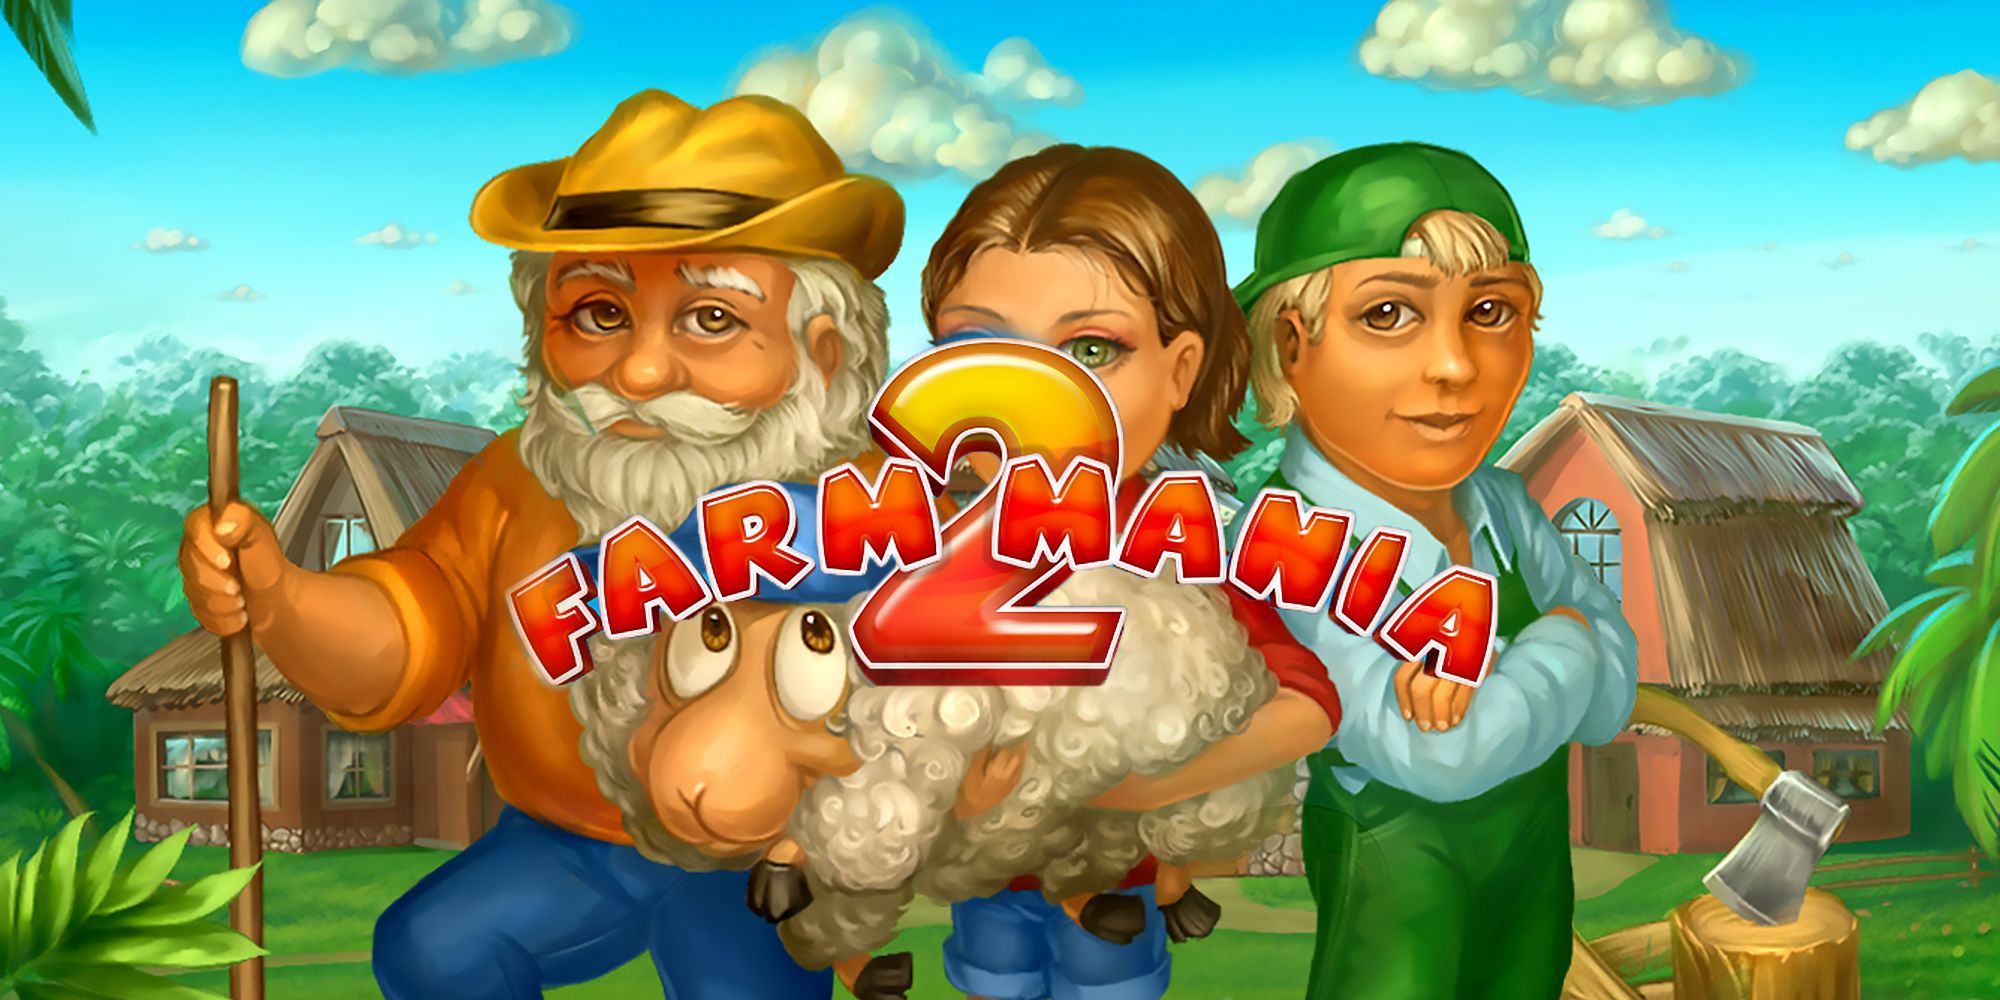 free farm mania 2 online games